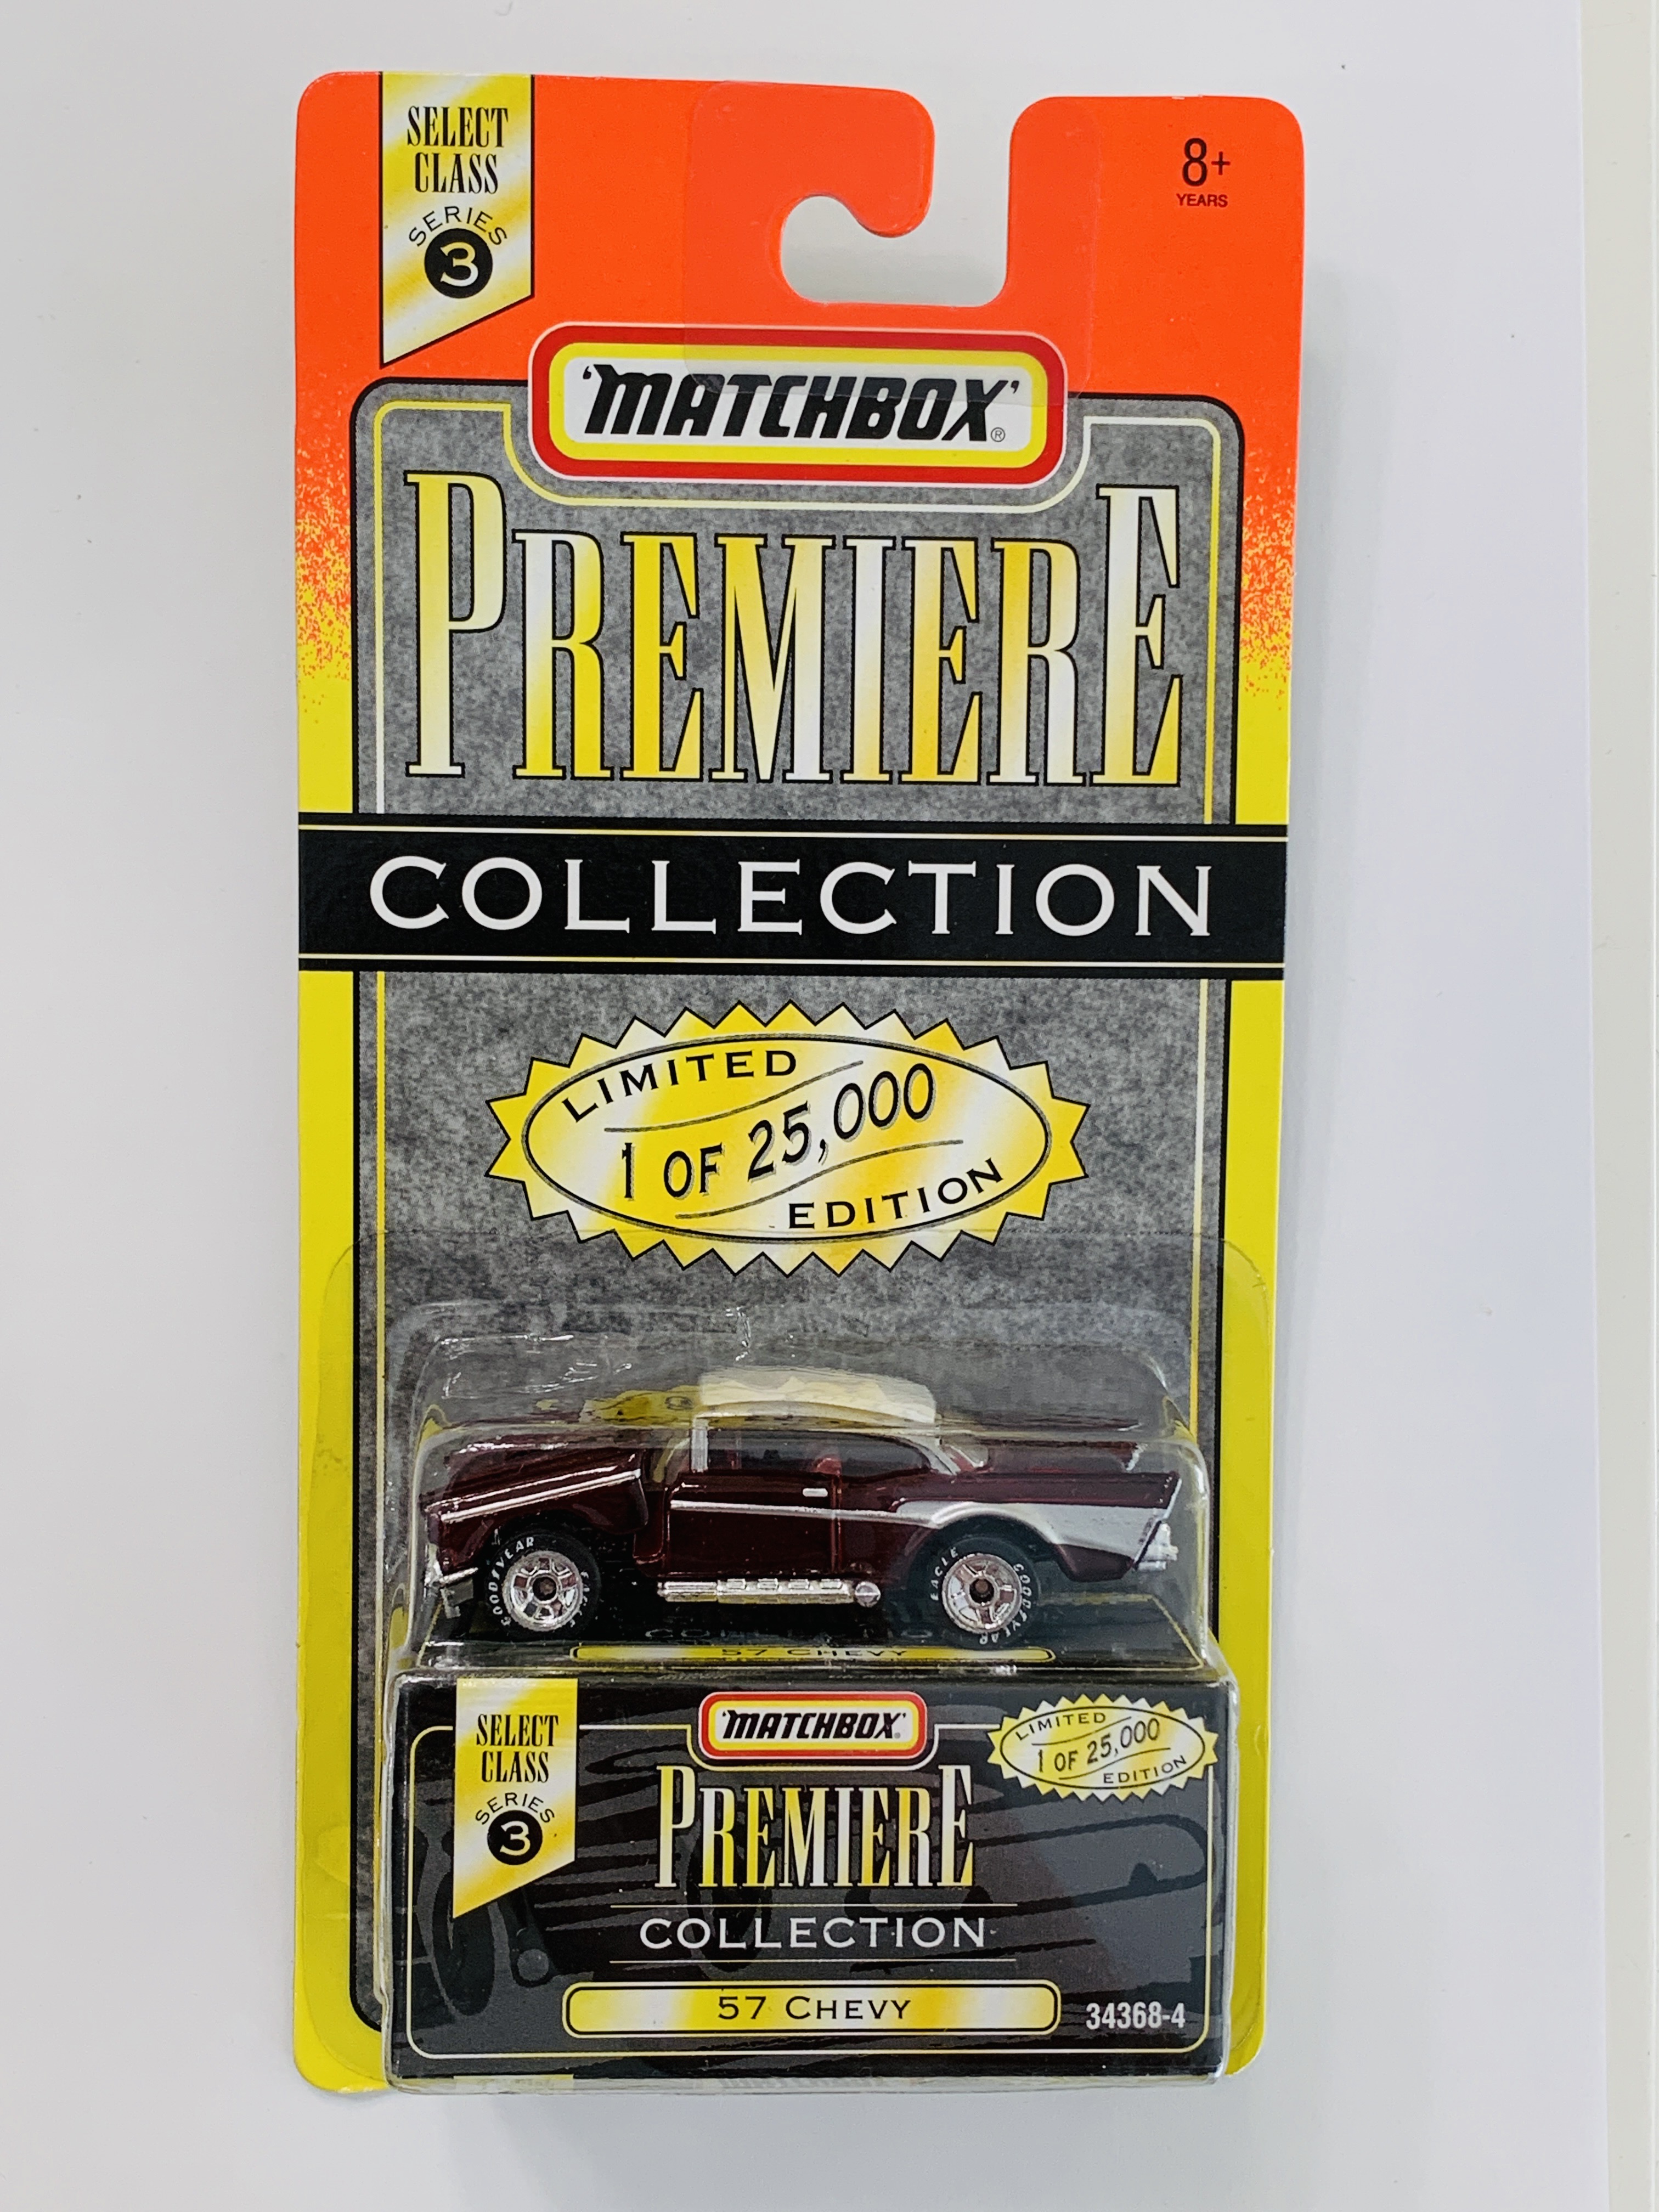 Matchbox Premiere Select Class Series 3 '57 Chevy